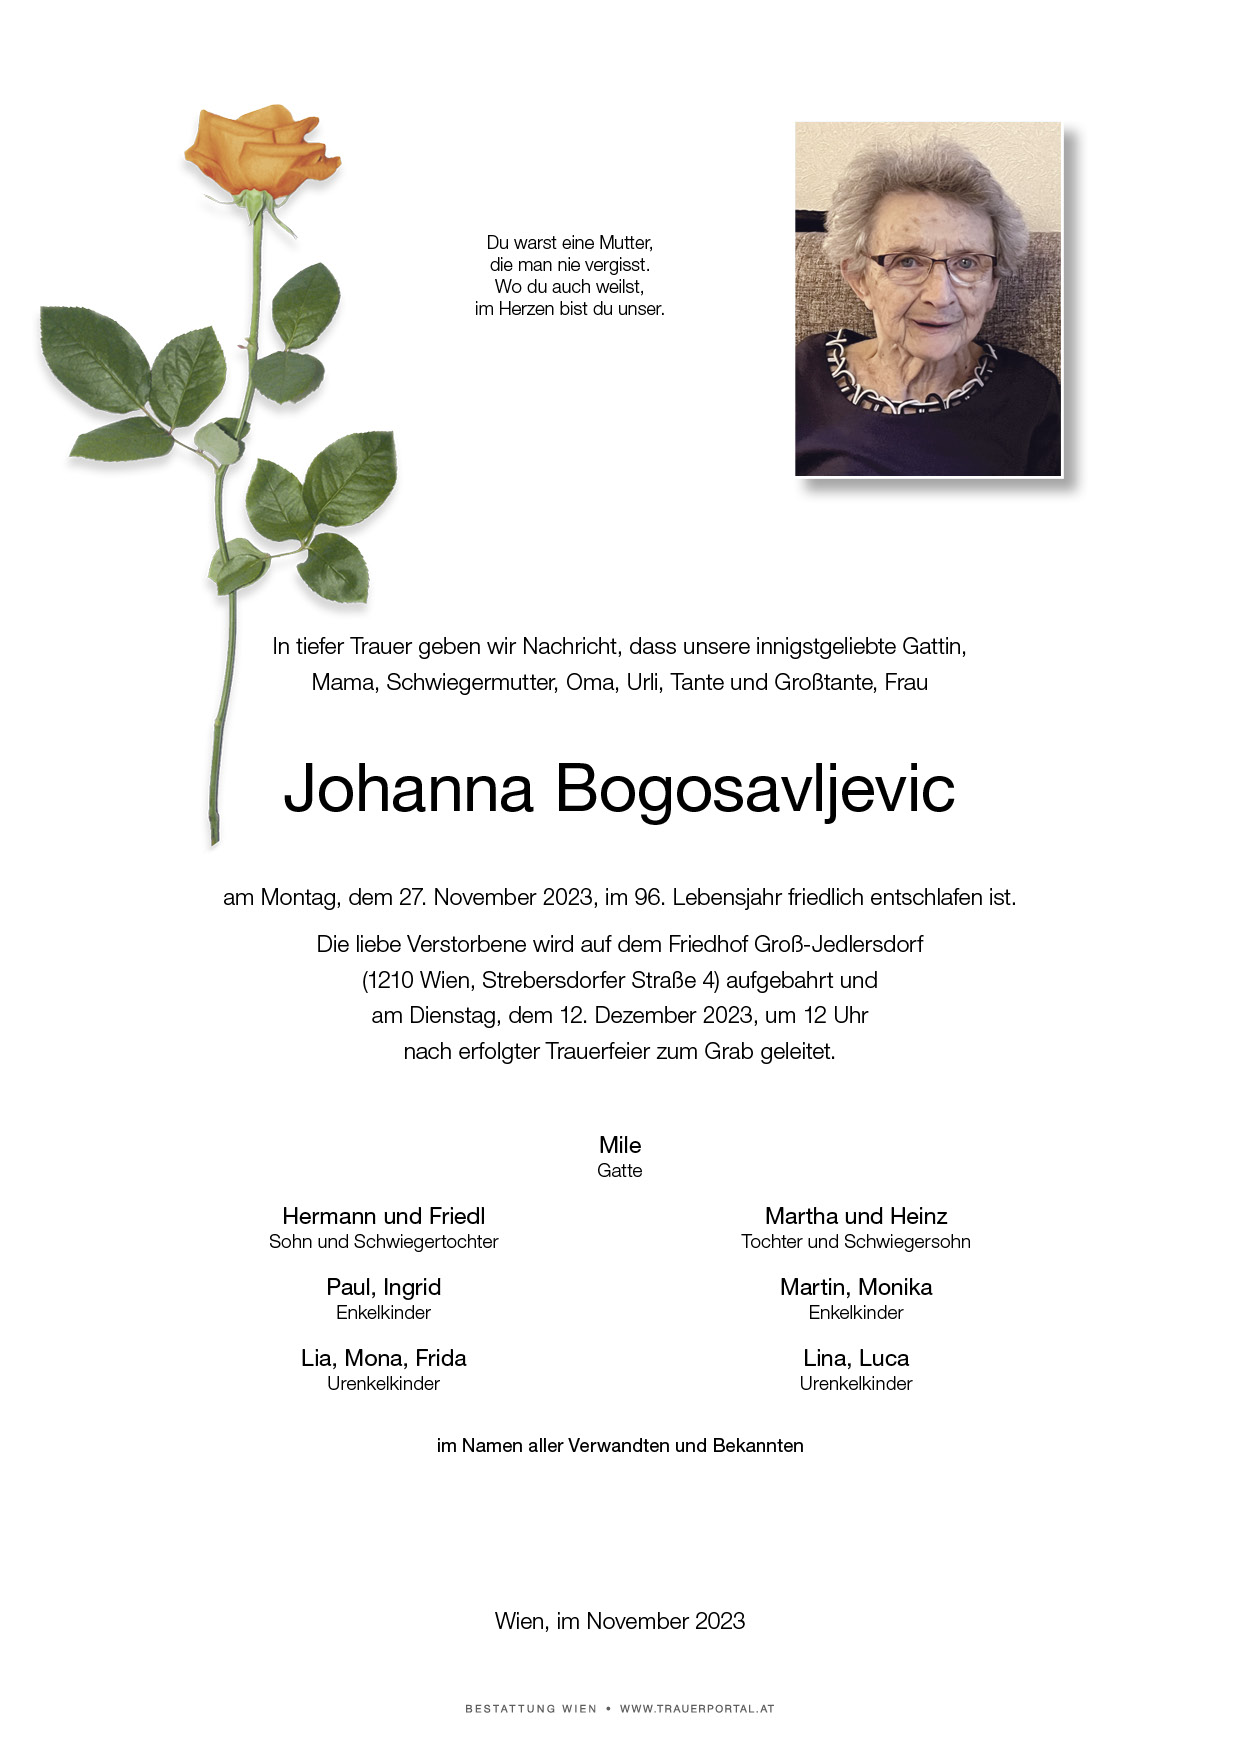 Johanna Bogosavljevic